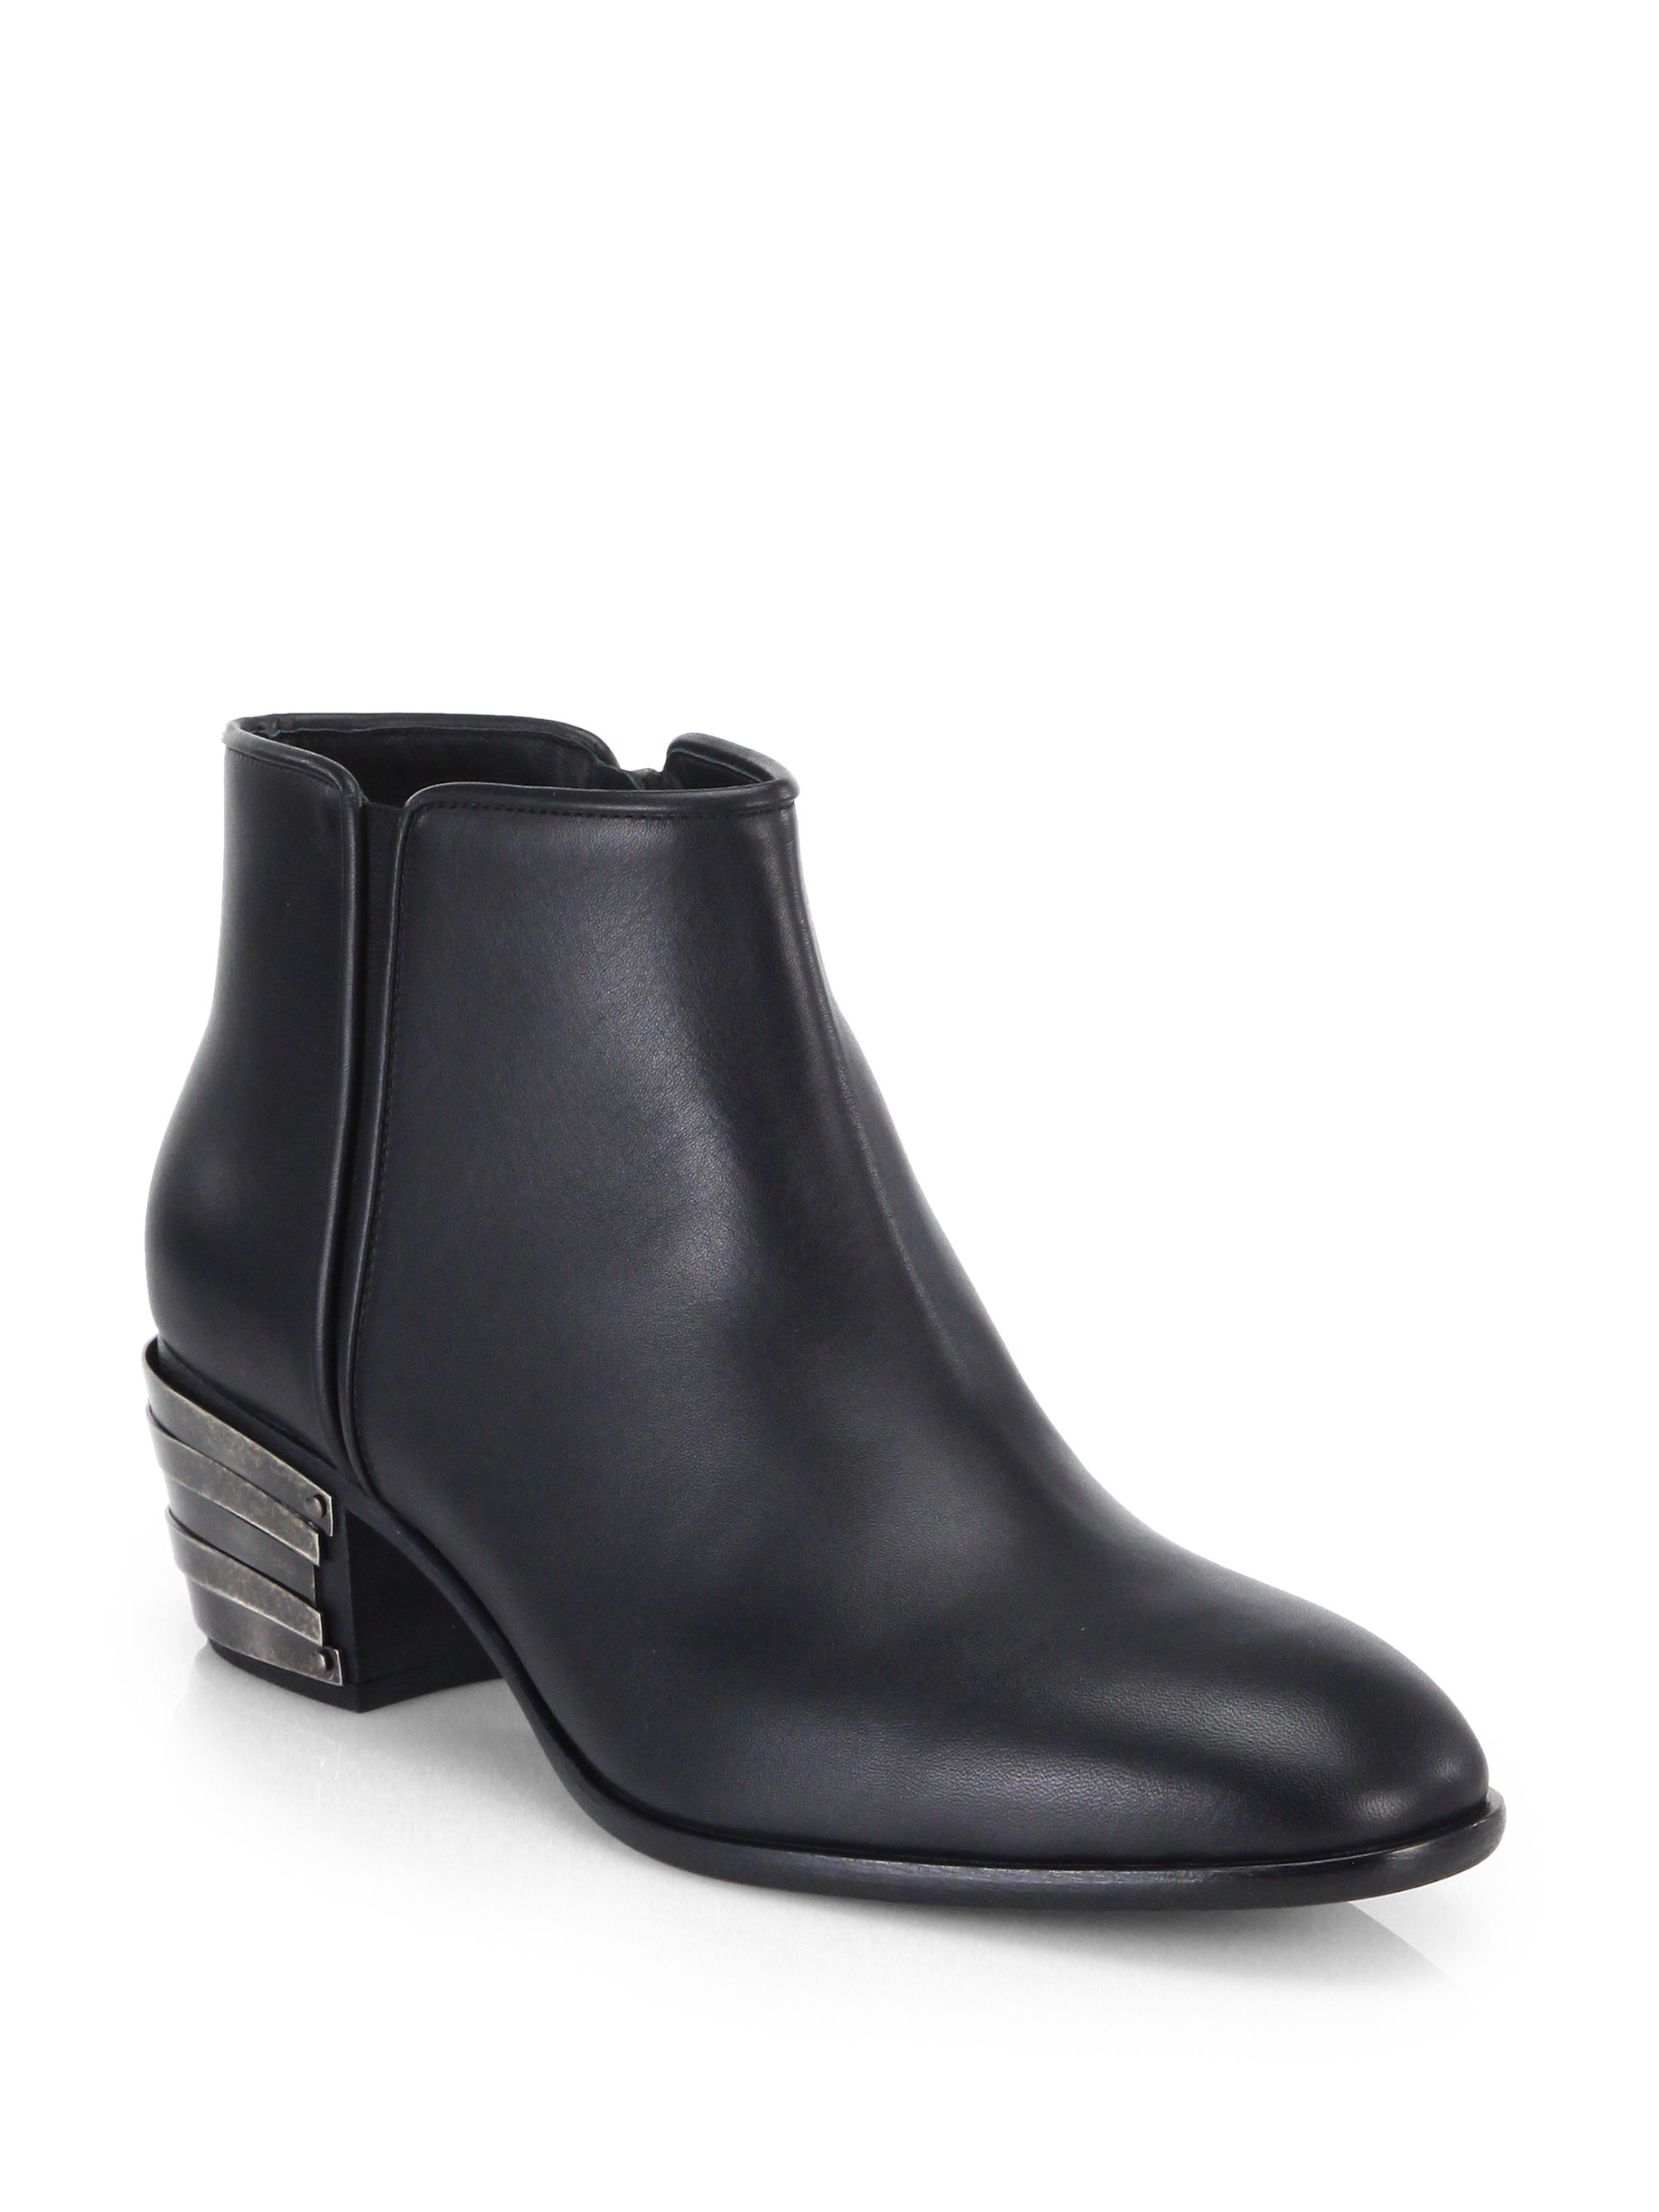 Giuseppe Zanotti Metal Heel Leather Ankle Boots in Black for Men - Lyst